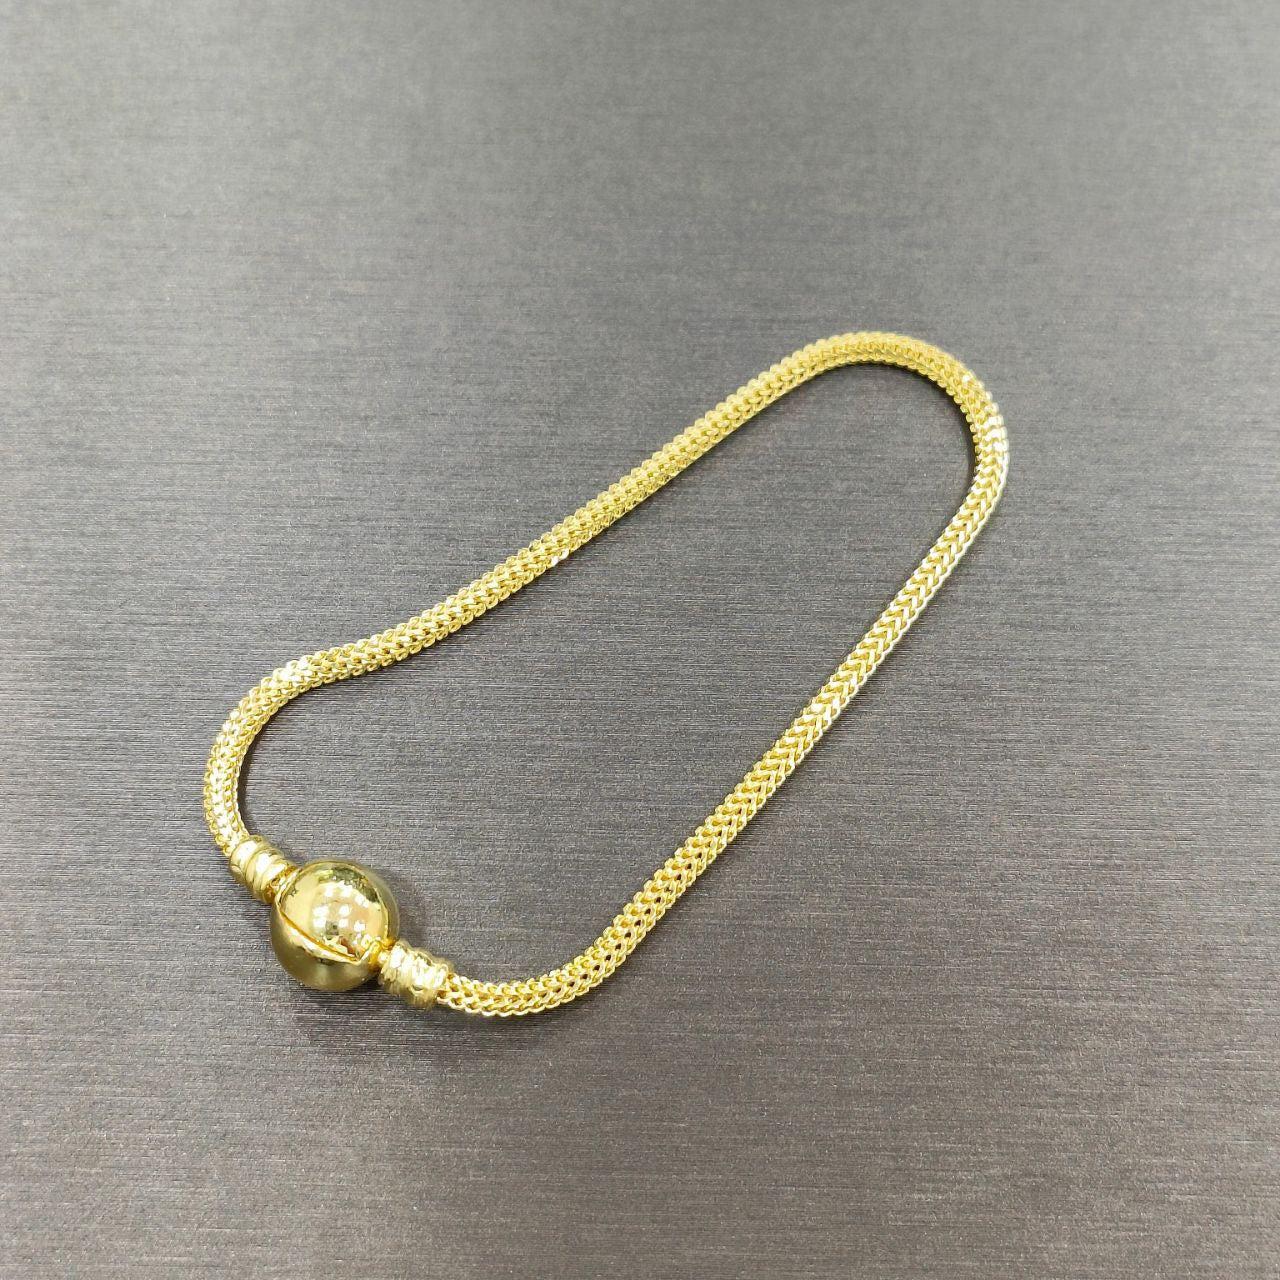 22k/916 Gold Charm Bracelet with Round lock-916 gold-Best Gold Shop